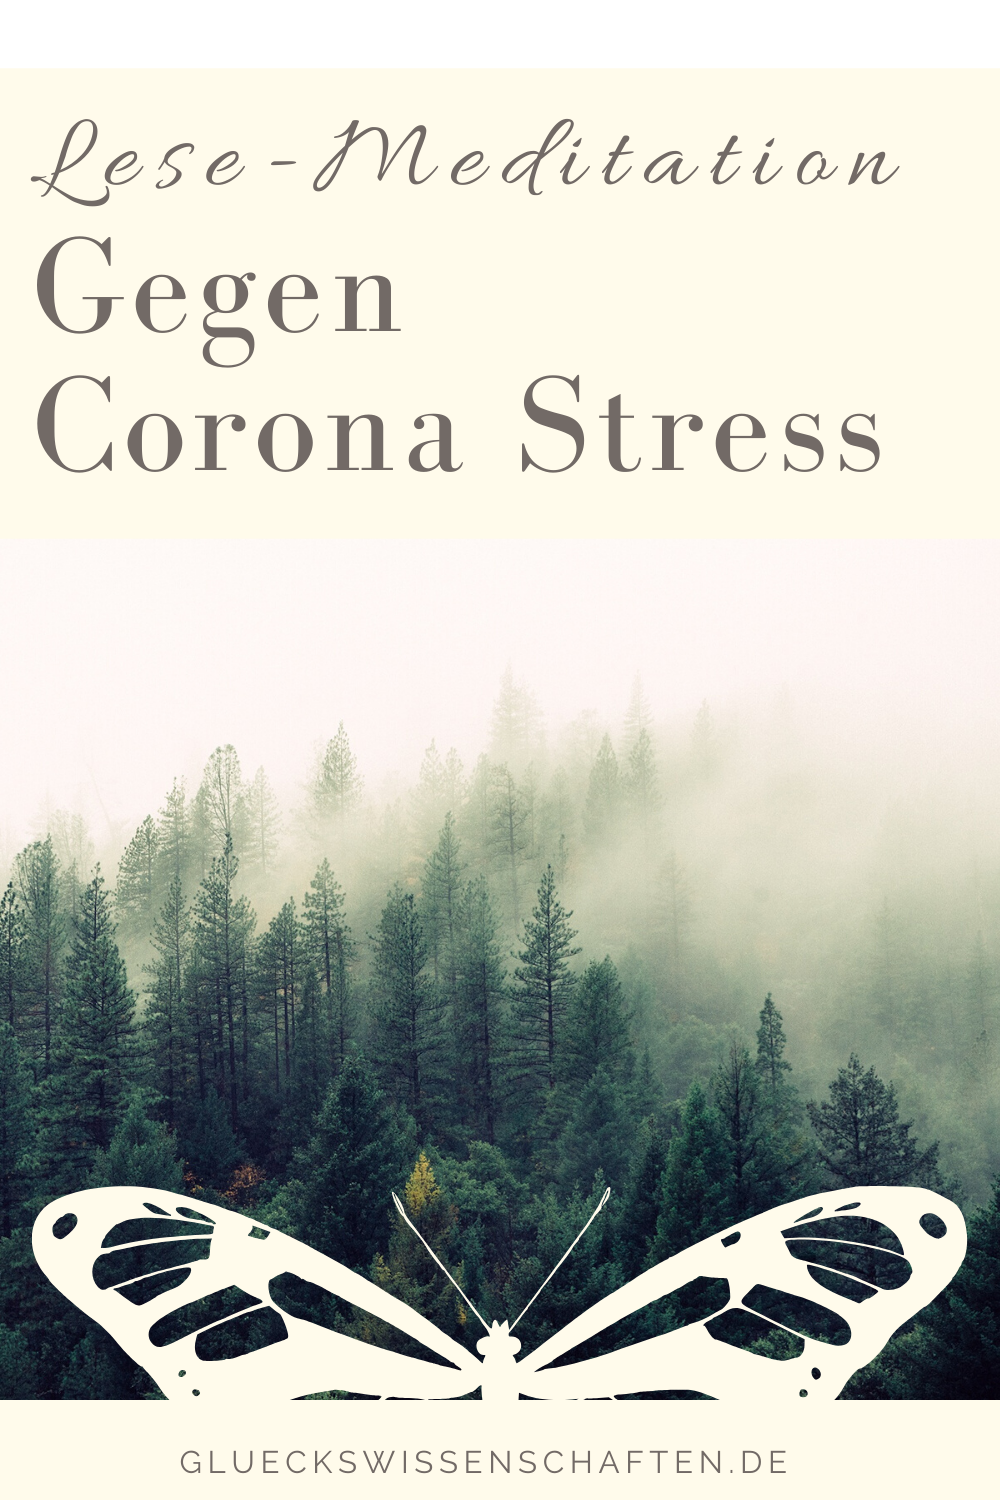 Glückswissenschaften - Lese-Meditation - Gegen Corona Stress